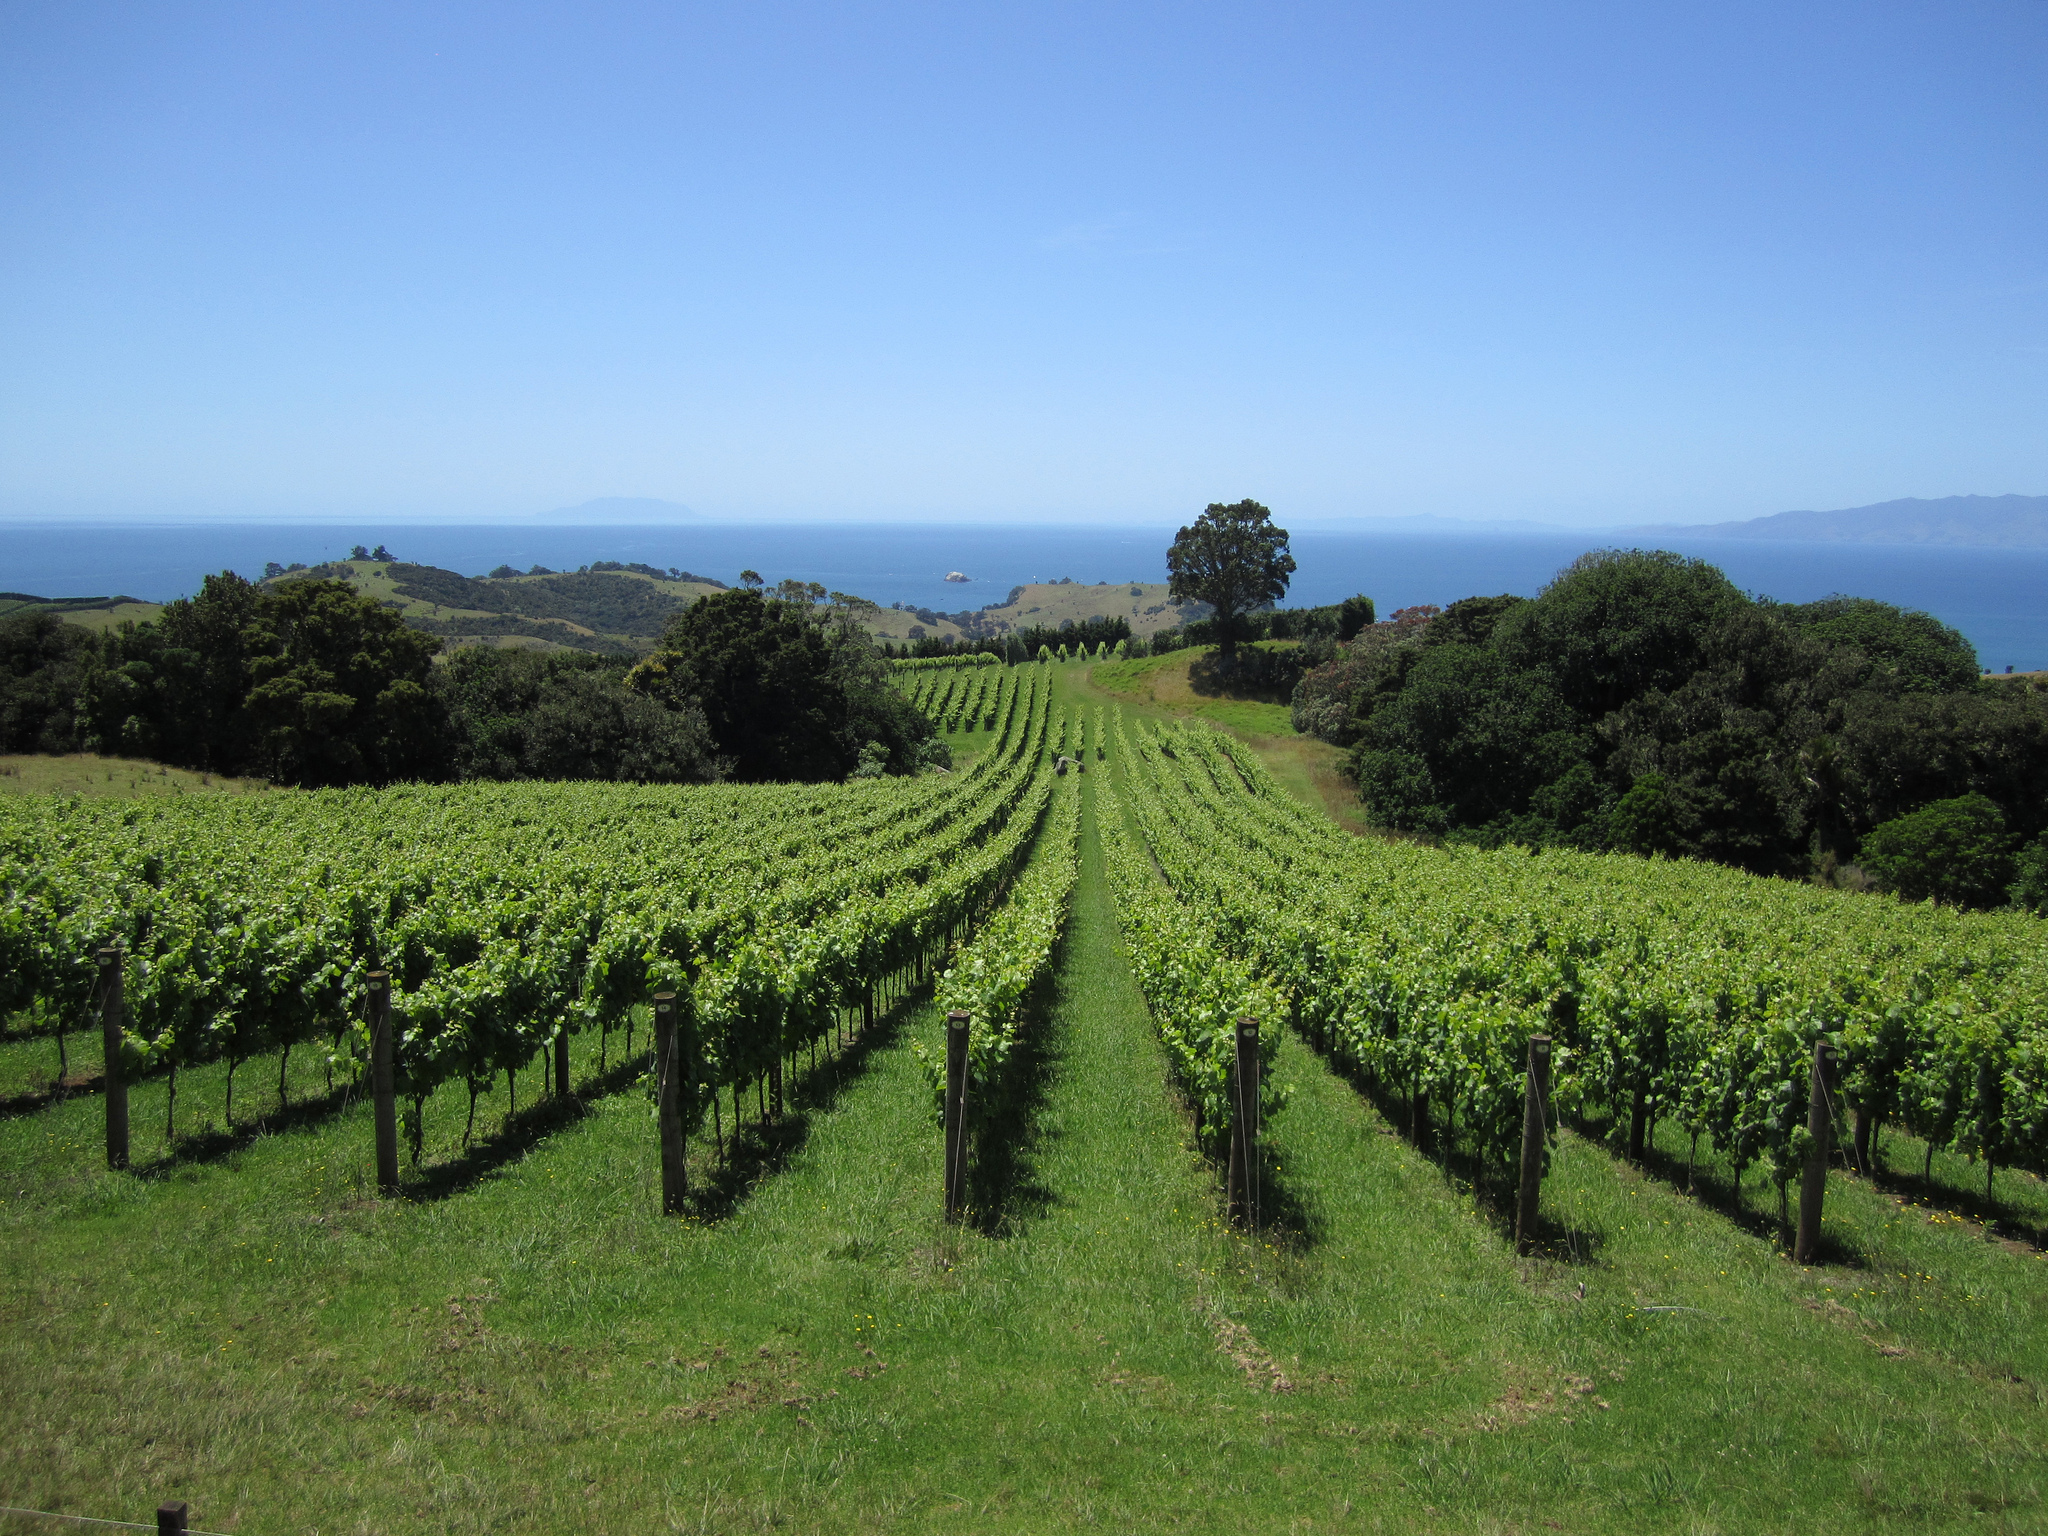 Vineyards overlooking the ocean on Waiheke Island. Image by portengaround / CC BY 